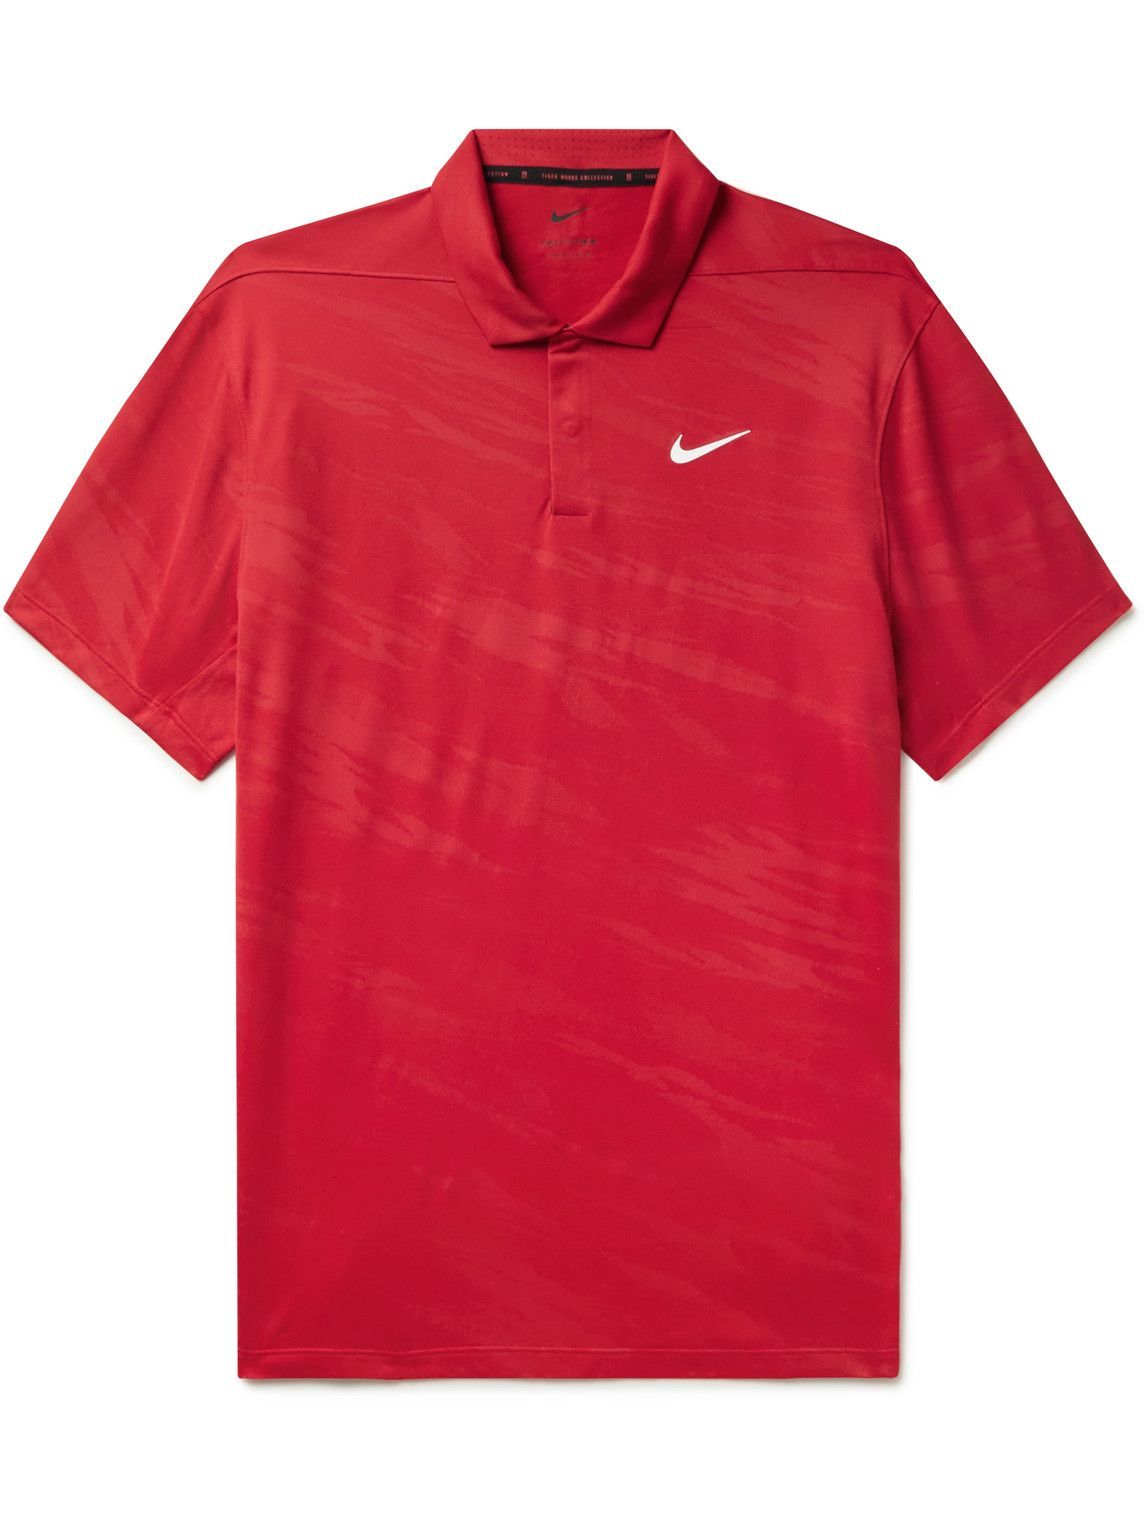 Nike Golf Tiger Woods Dri Fit Adv Golf Polo Shirt Red Nike Golf